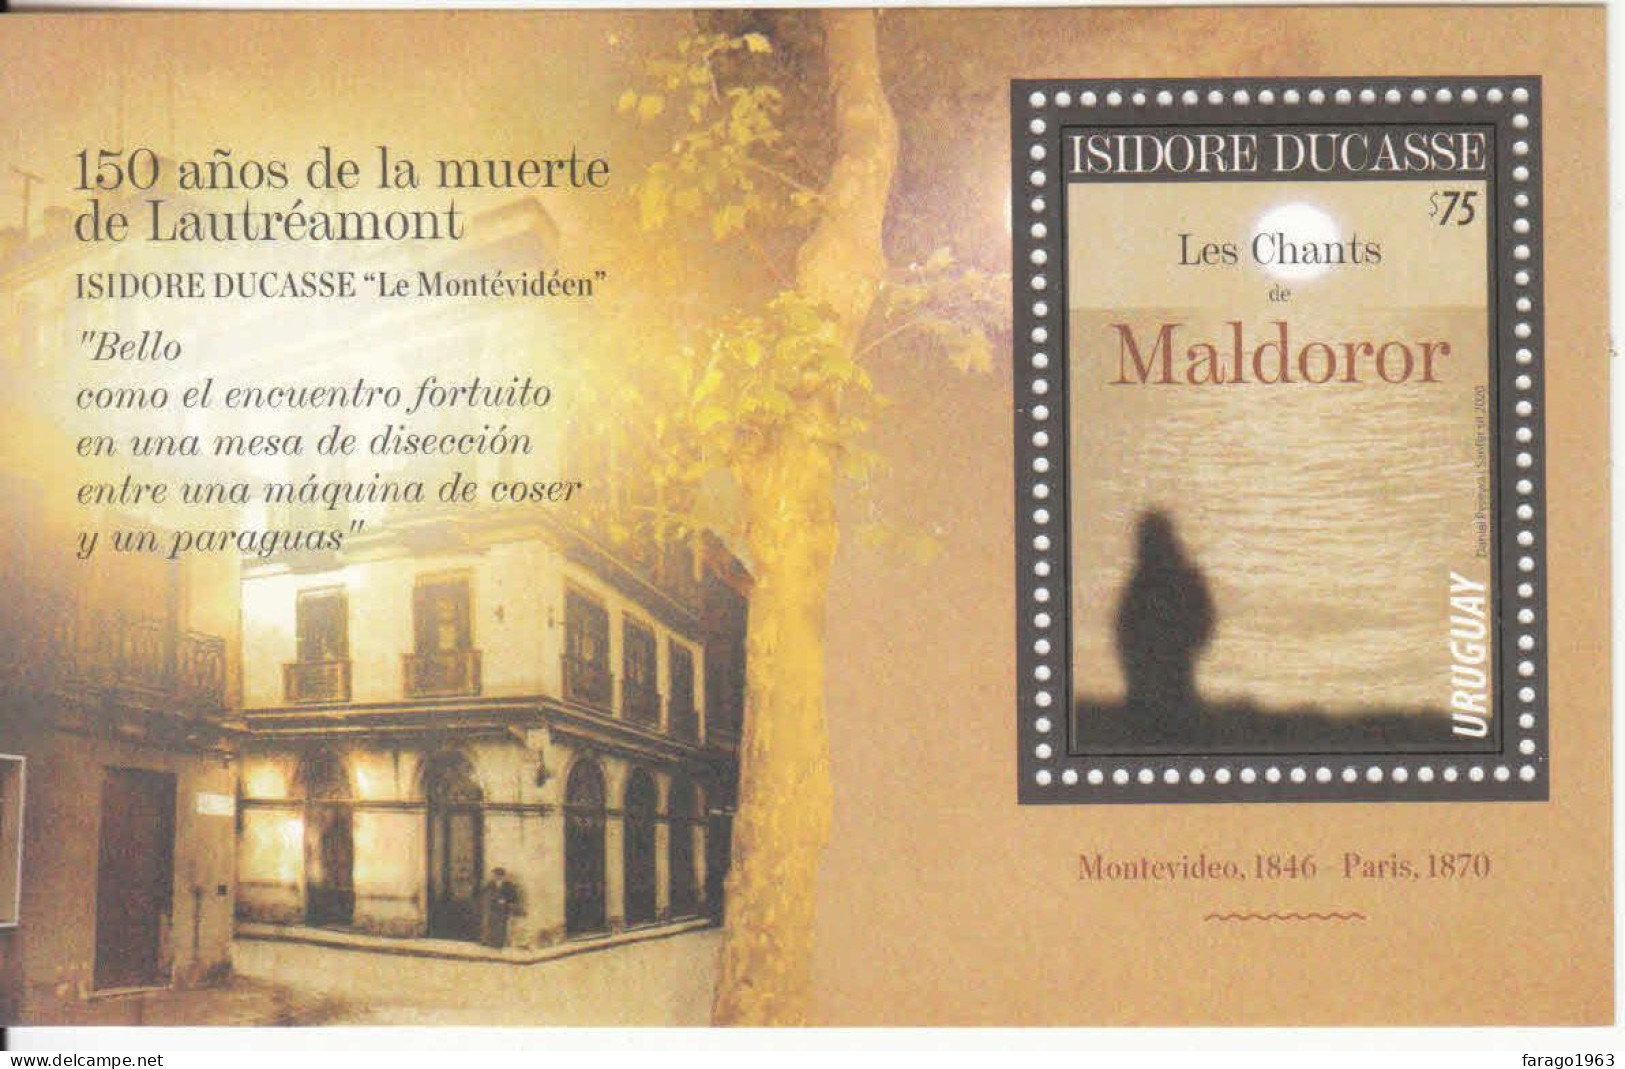 2020 Uruguay Ducasse Maldoror Literature Souvenir Sheet MNH - Uruguay